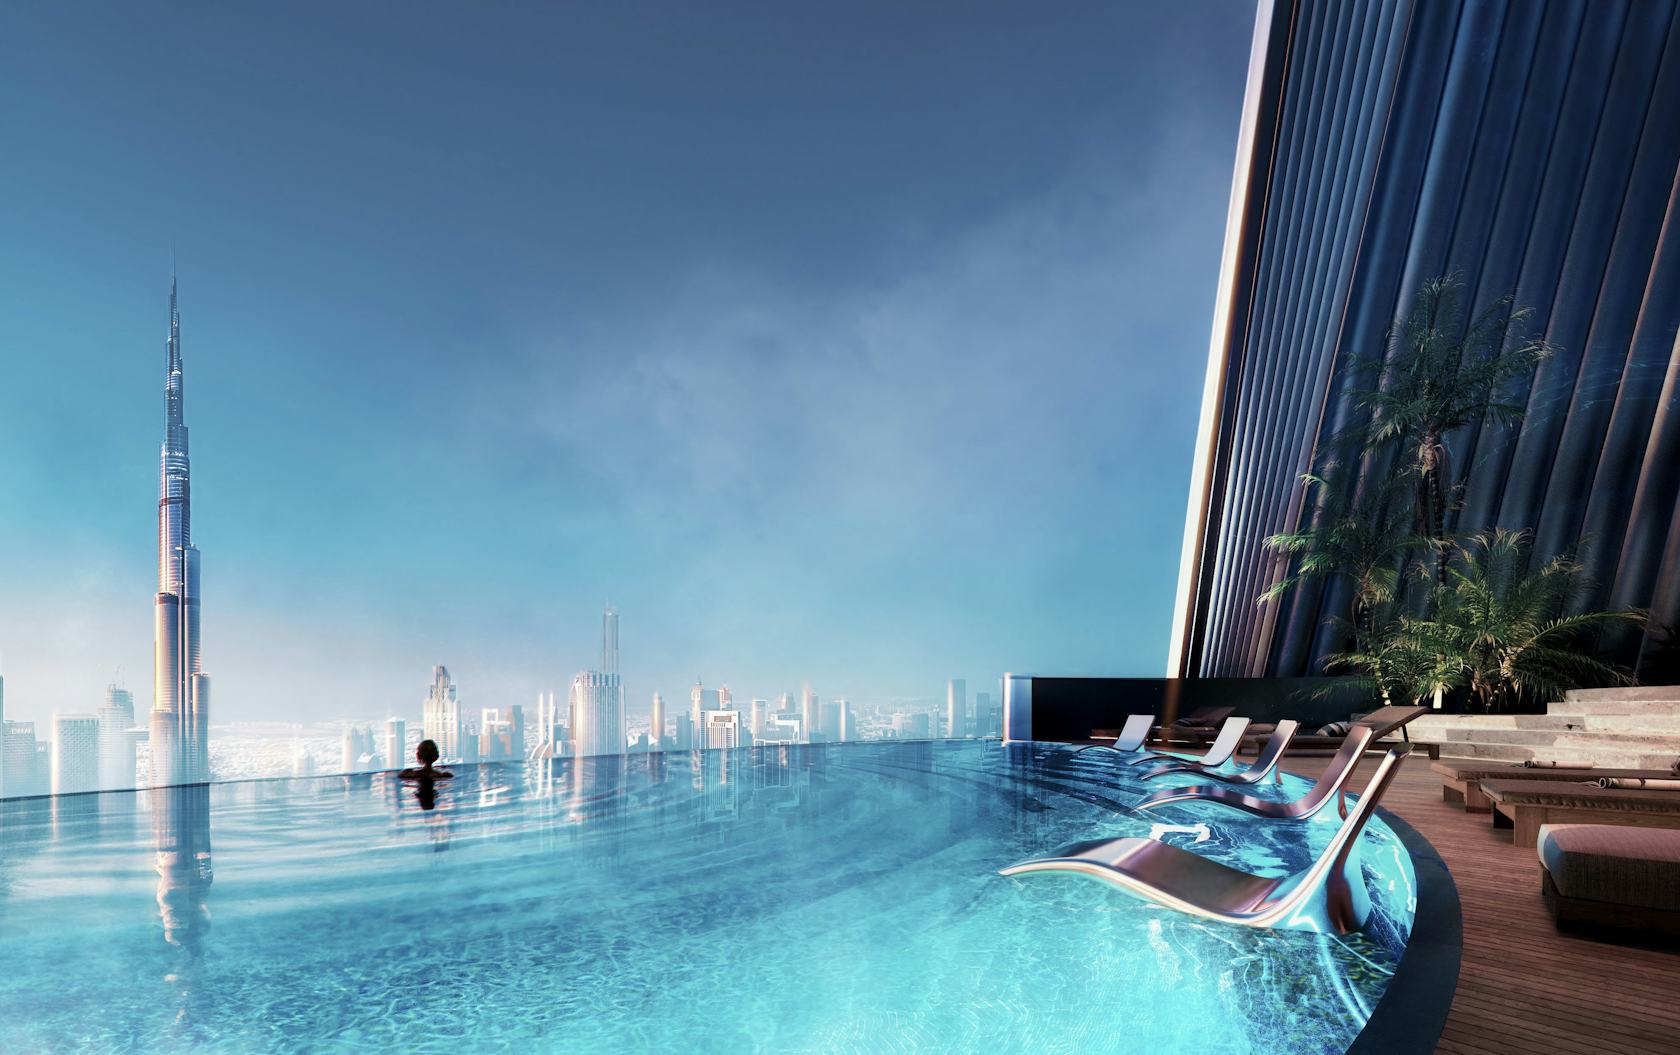 city pool water swimming pool hotel urban high rise resort outdoors scenery